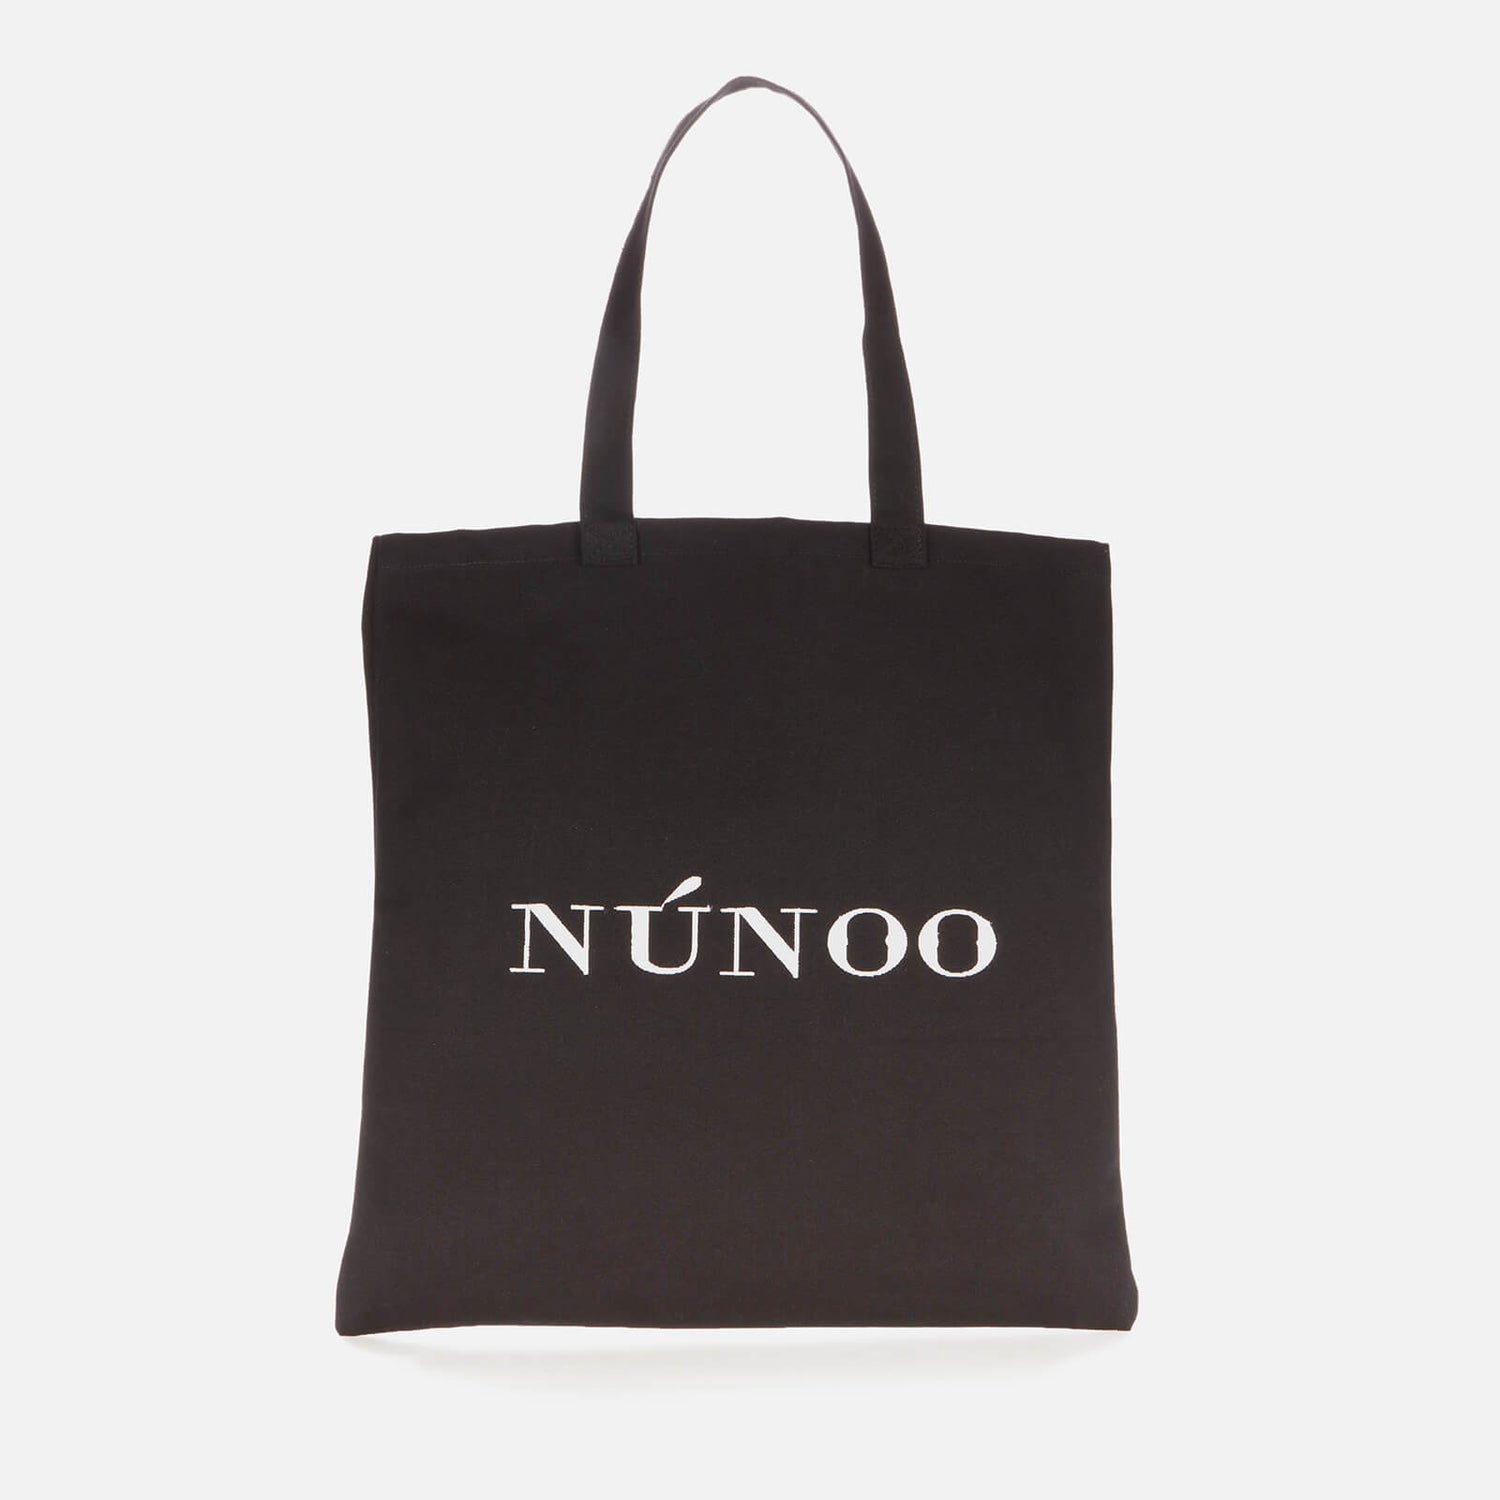 Núnoo Women's Recycled Canvas Shopper - Black